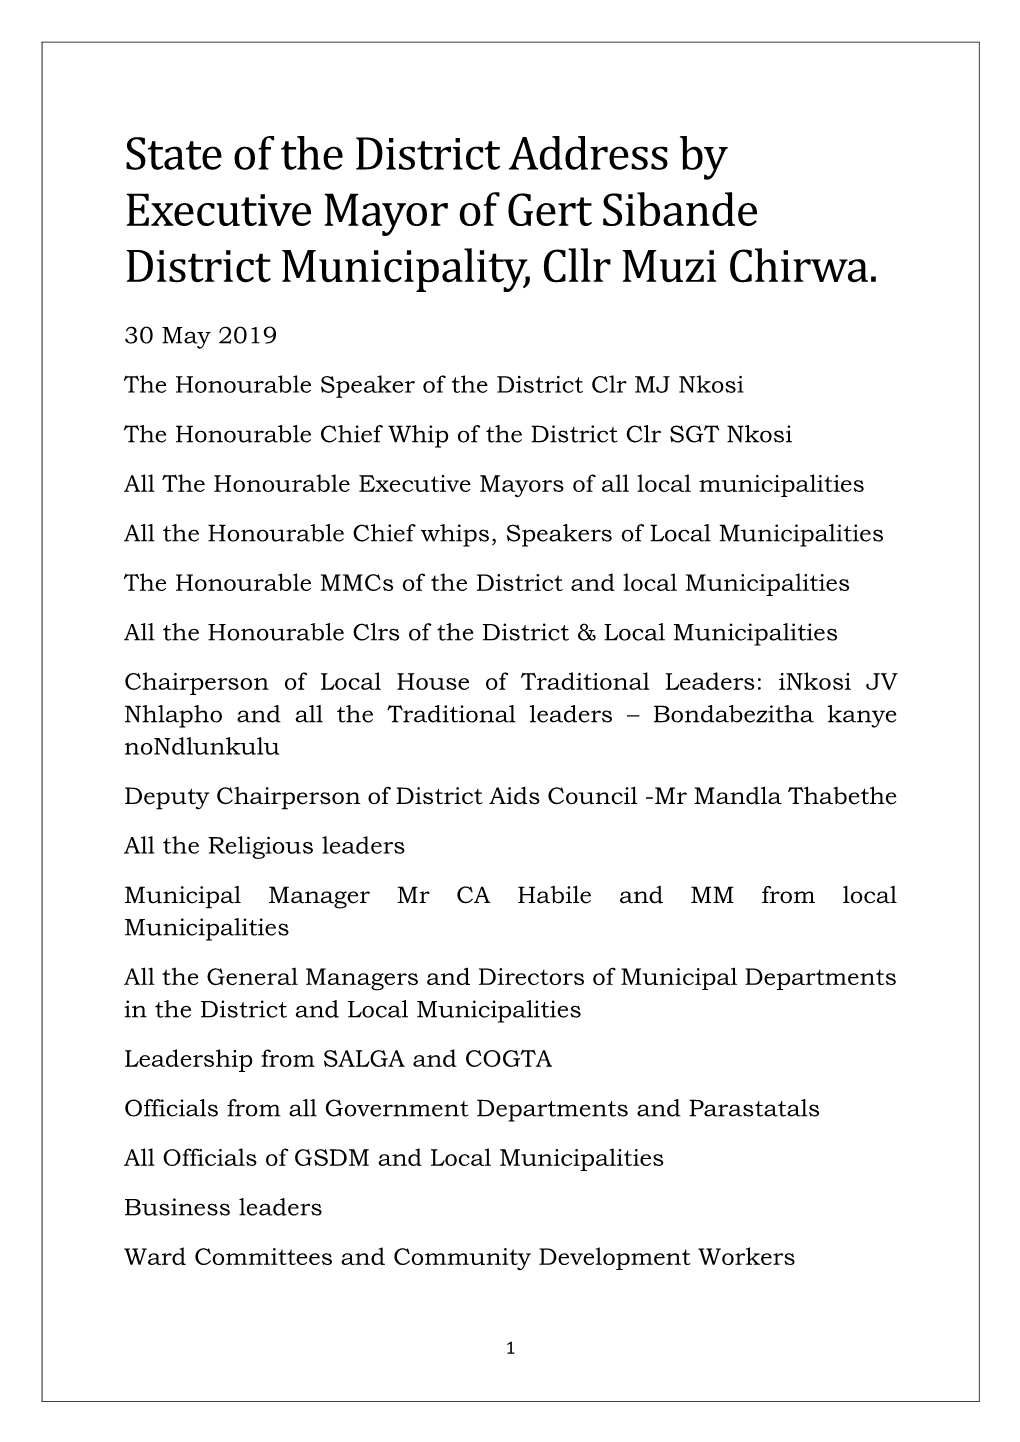 State of the District Address by Executive Mayor of Gert Sibande District Municipality, Cllr Muzi Chirwa